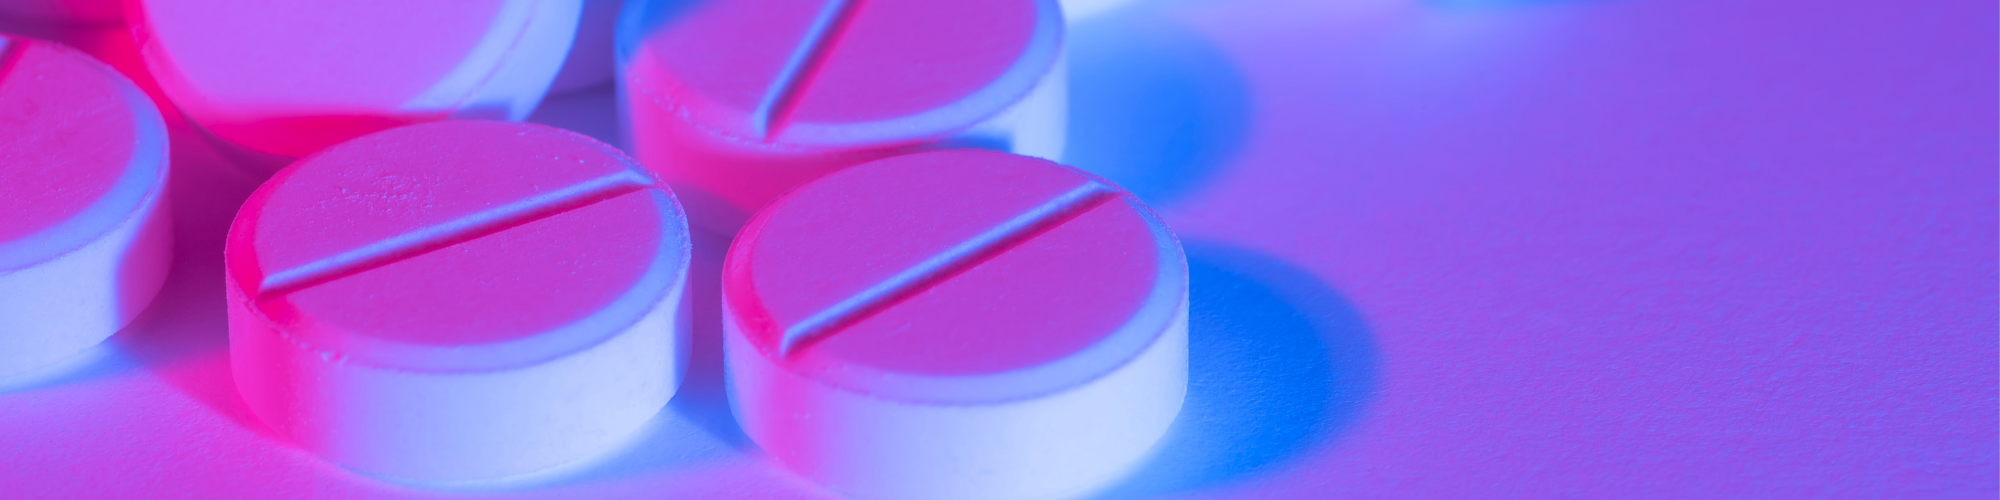 Substance Use Banner - pink illuminated pills